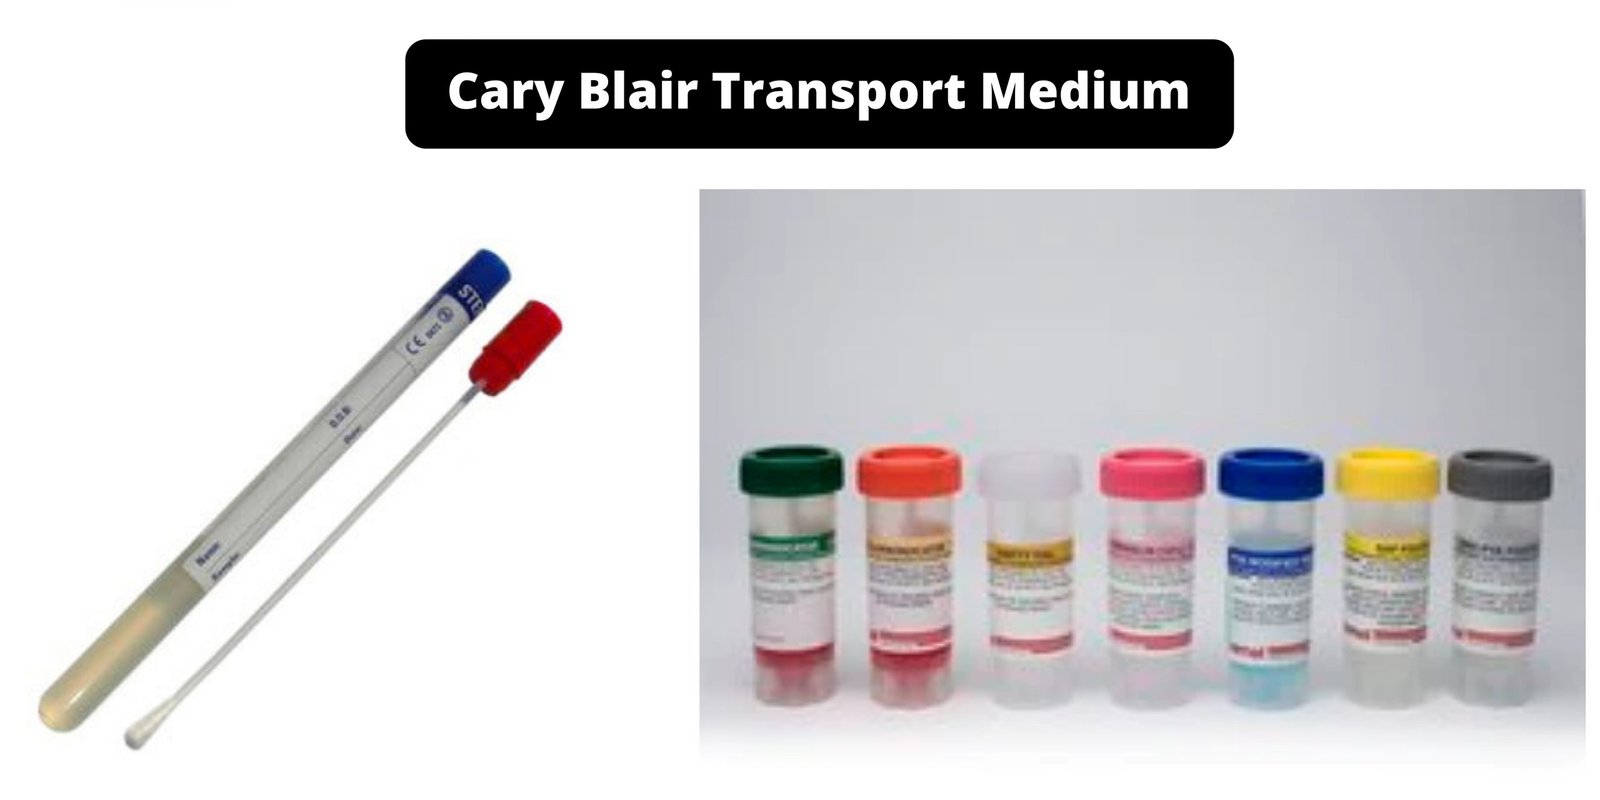 Cary Blair Transport Medium - Principle, Composition, Preparation, Uses, Results